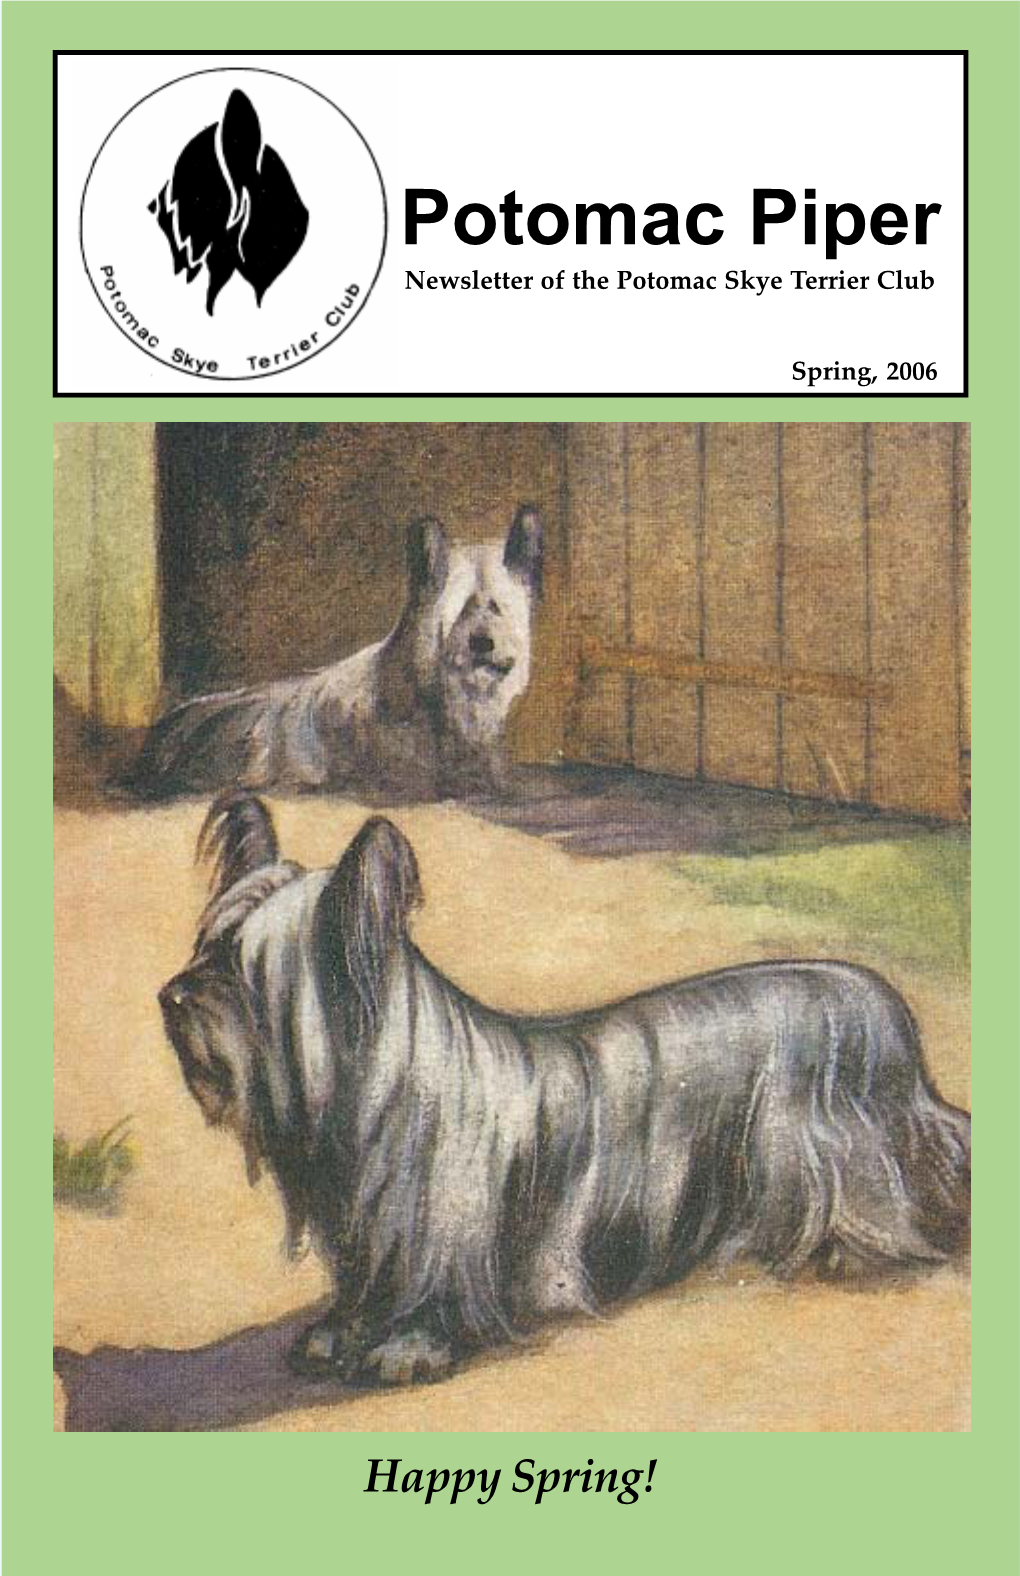 Potomac Piper Newsletter of the Potomac Skye Terrier Club